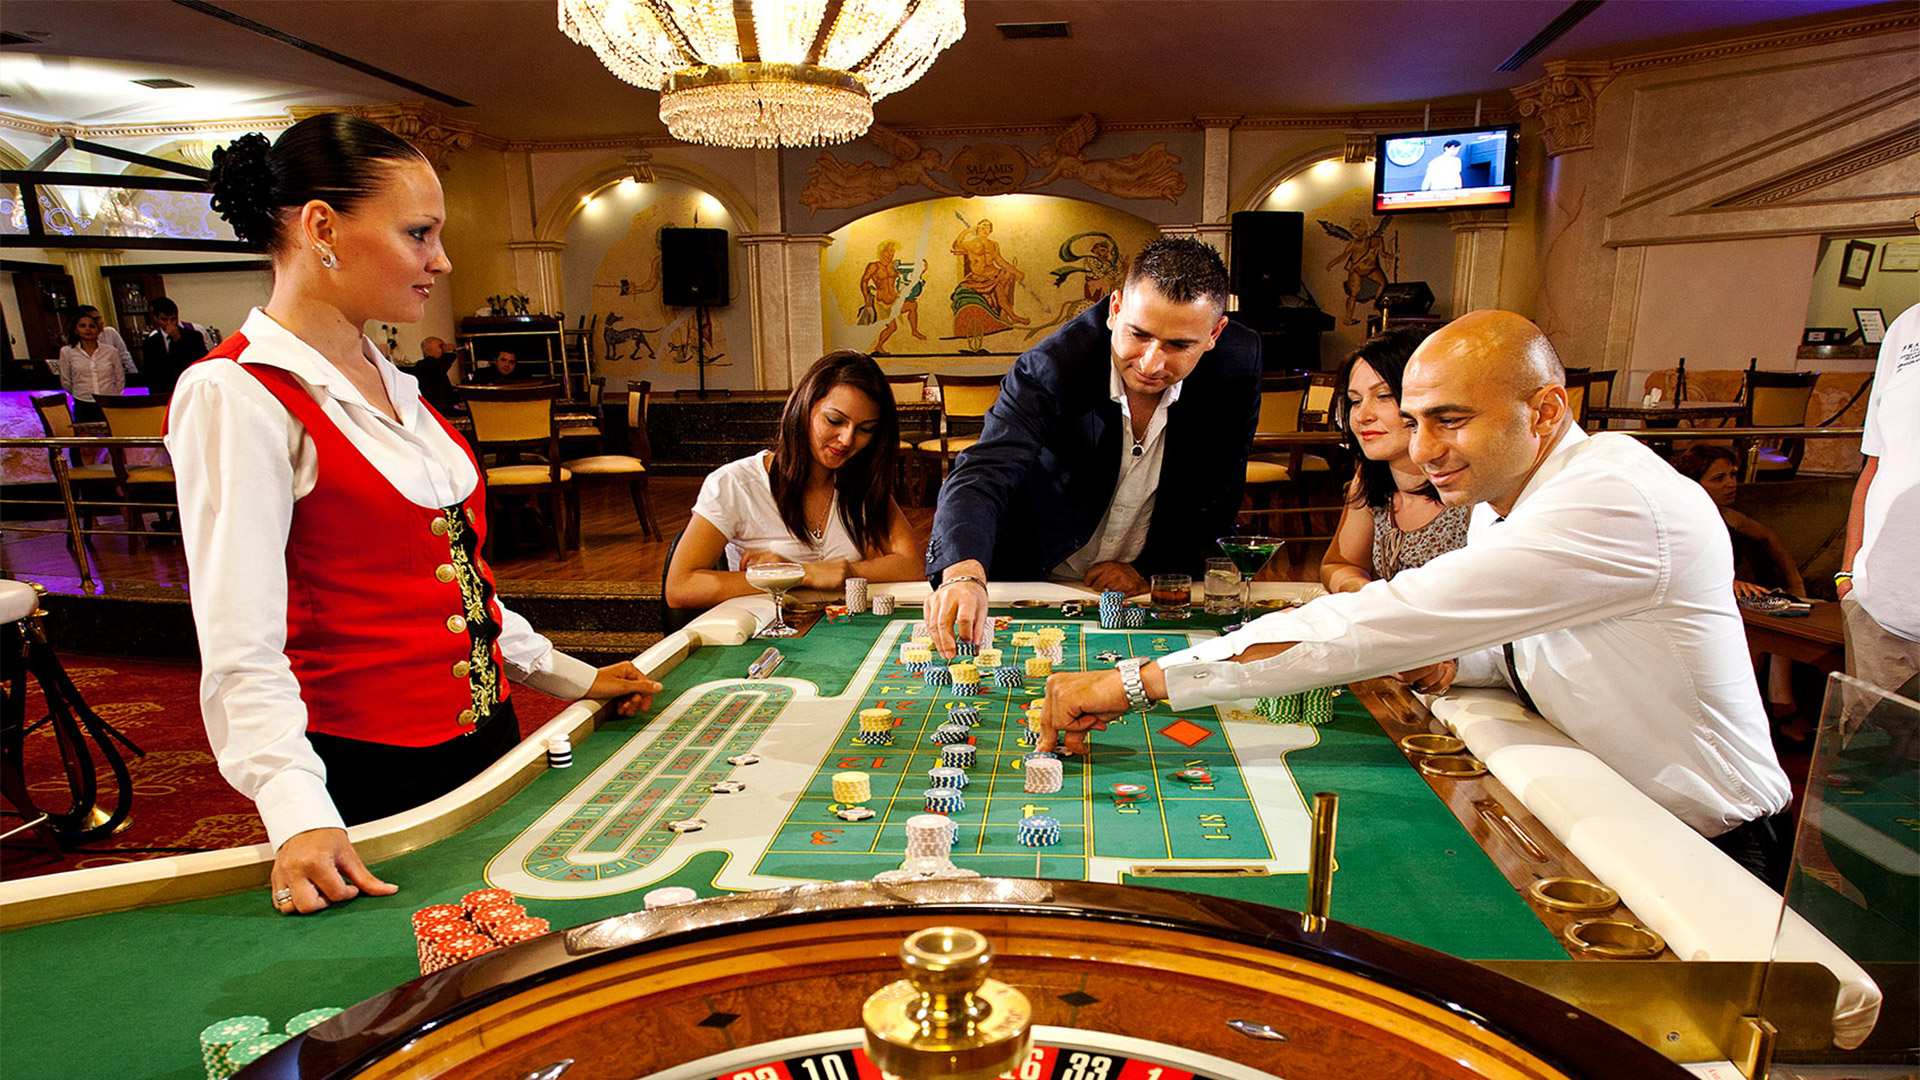 grand casino онлайн казино